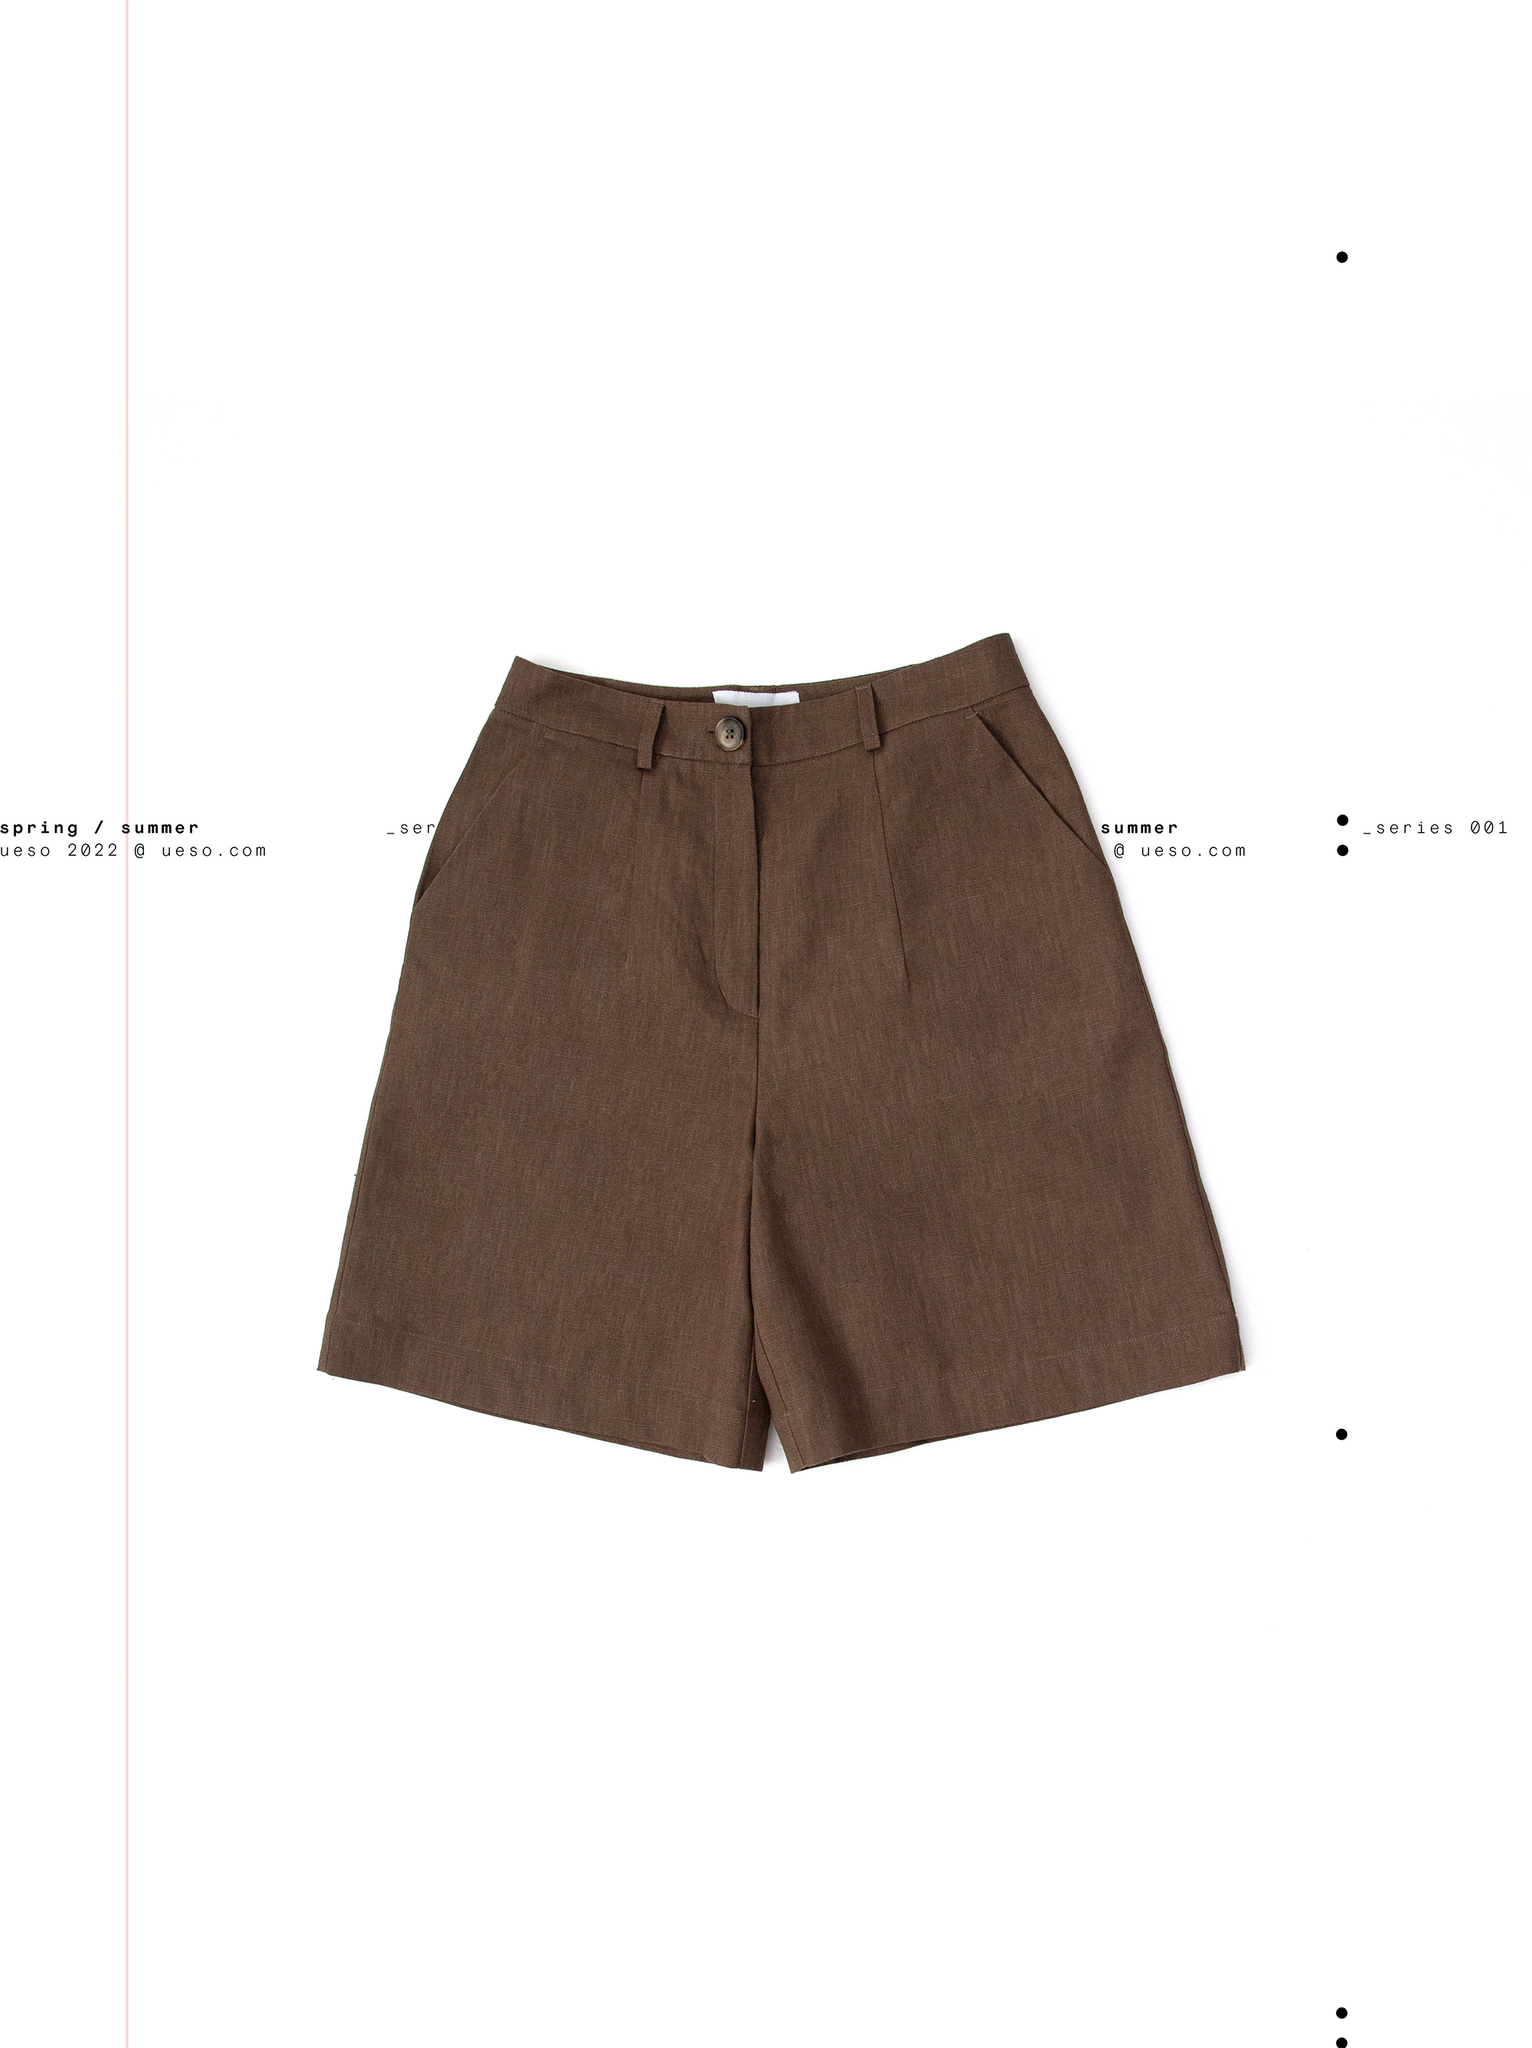 carver shorts in hazelnut